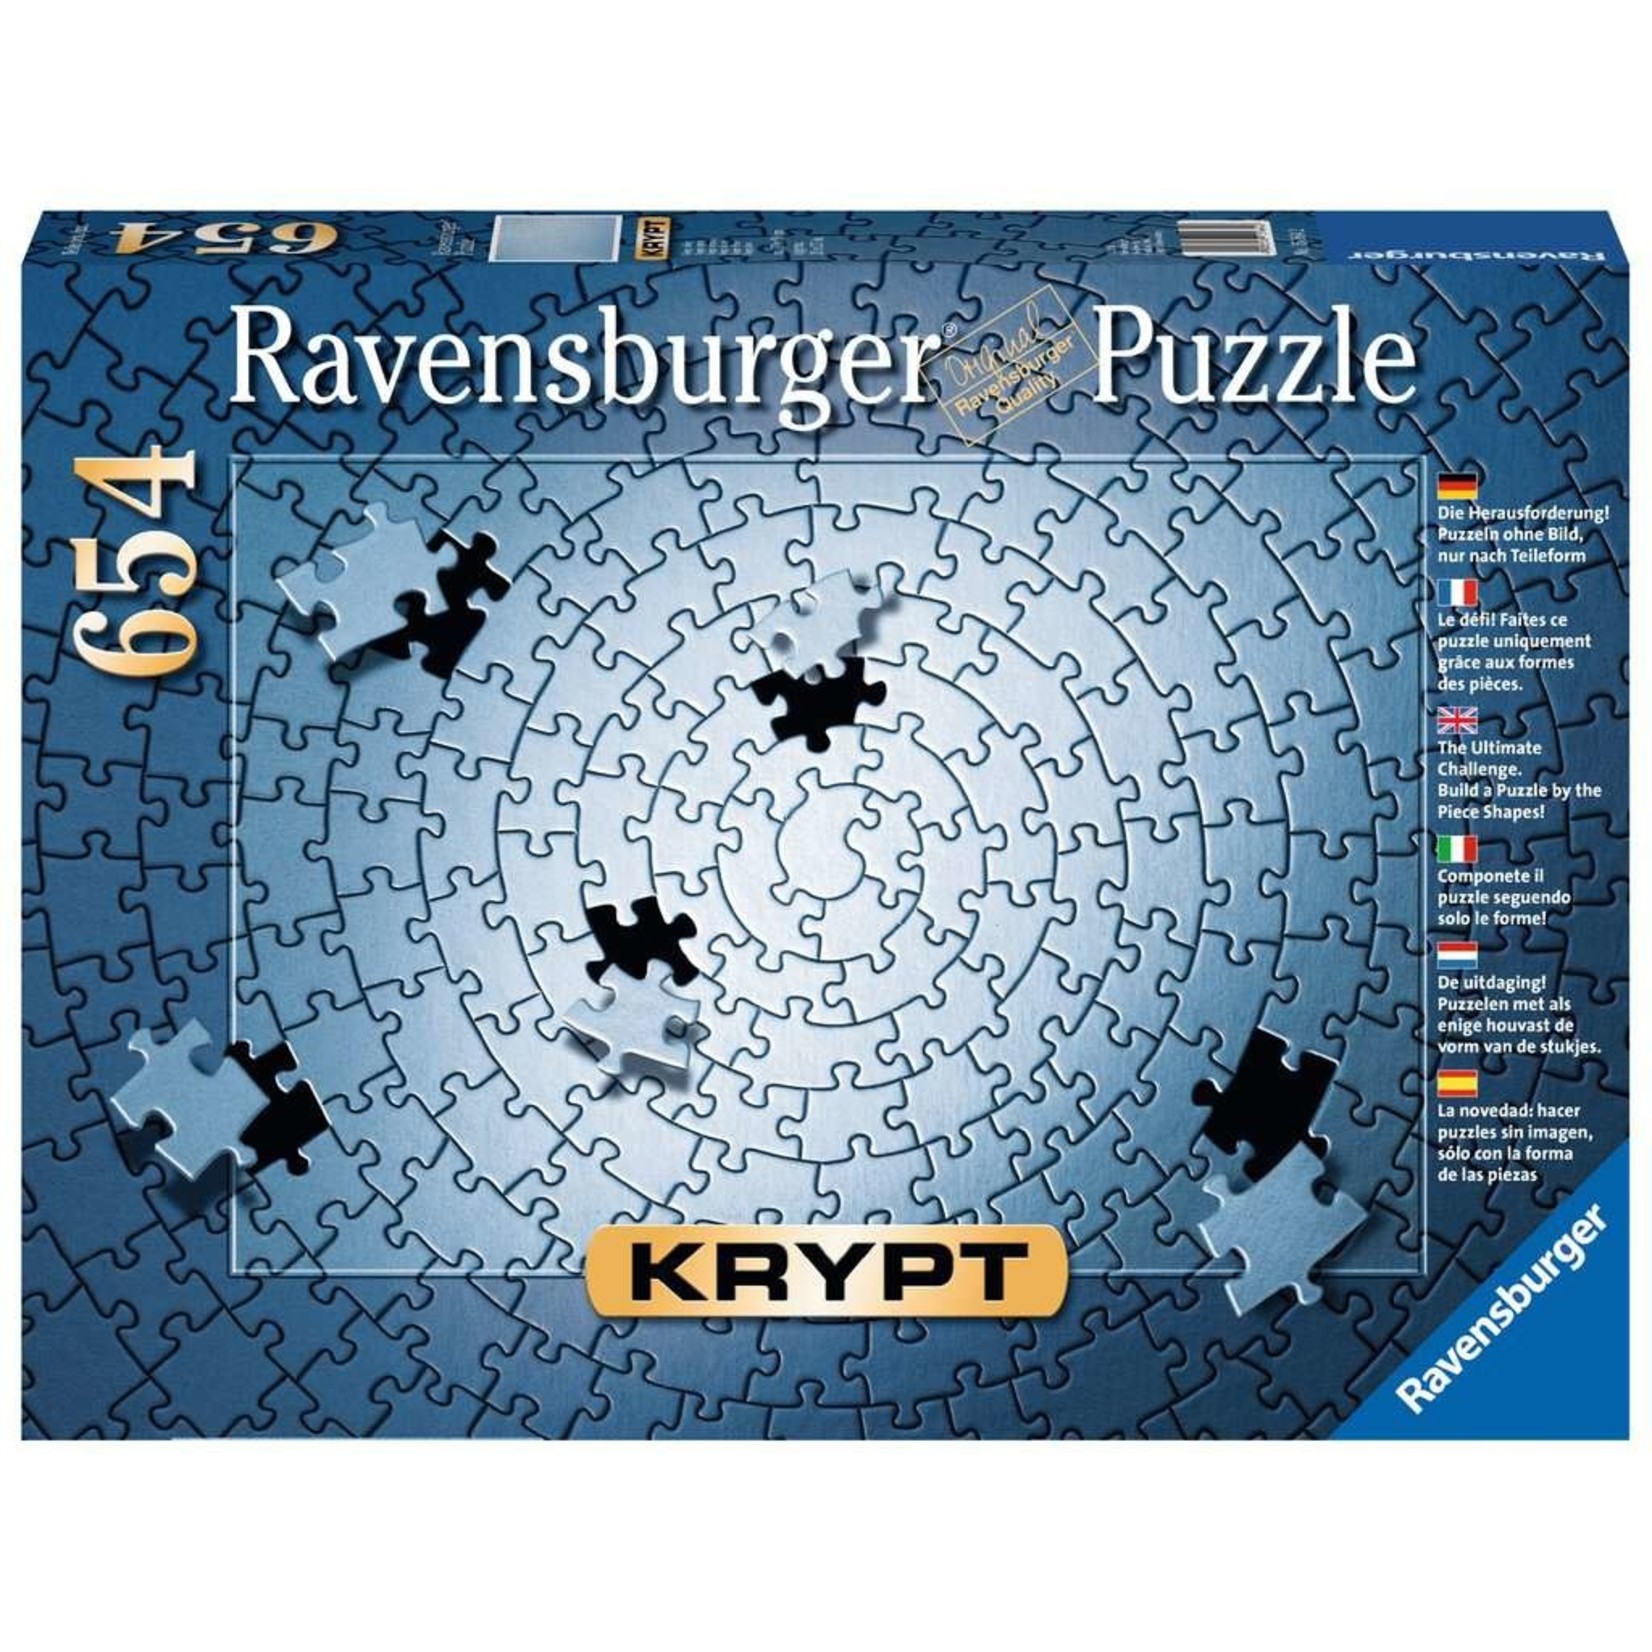 Ravensburger Krypt Silver 654 pc